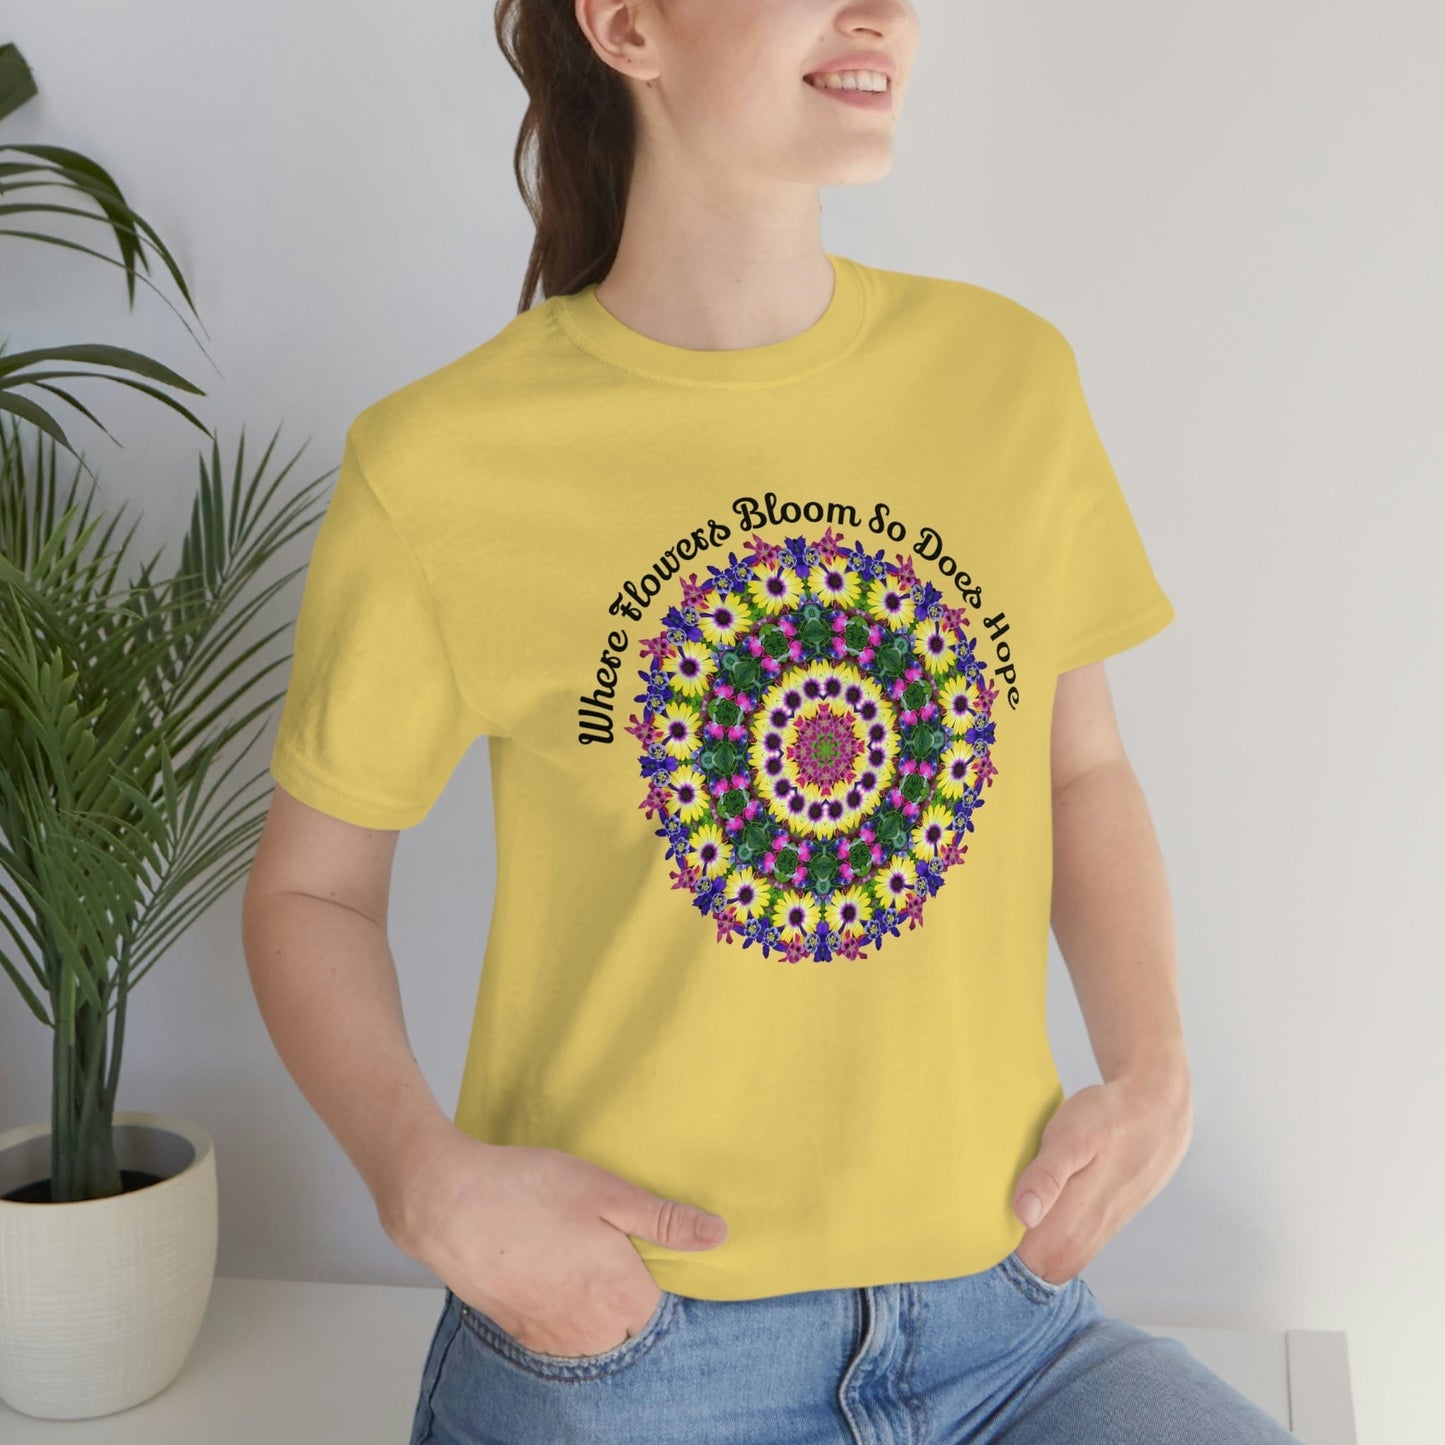 Daisy Love Kindness Shirt, Zen Poet Shirt, Fun Shirt Designs, Cute Shirts, Where Flowers Bloom So Does Hope